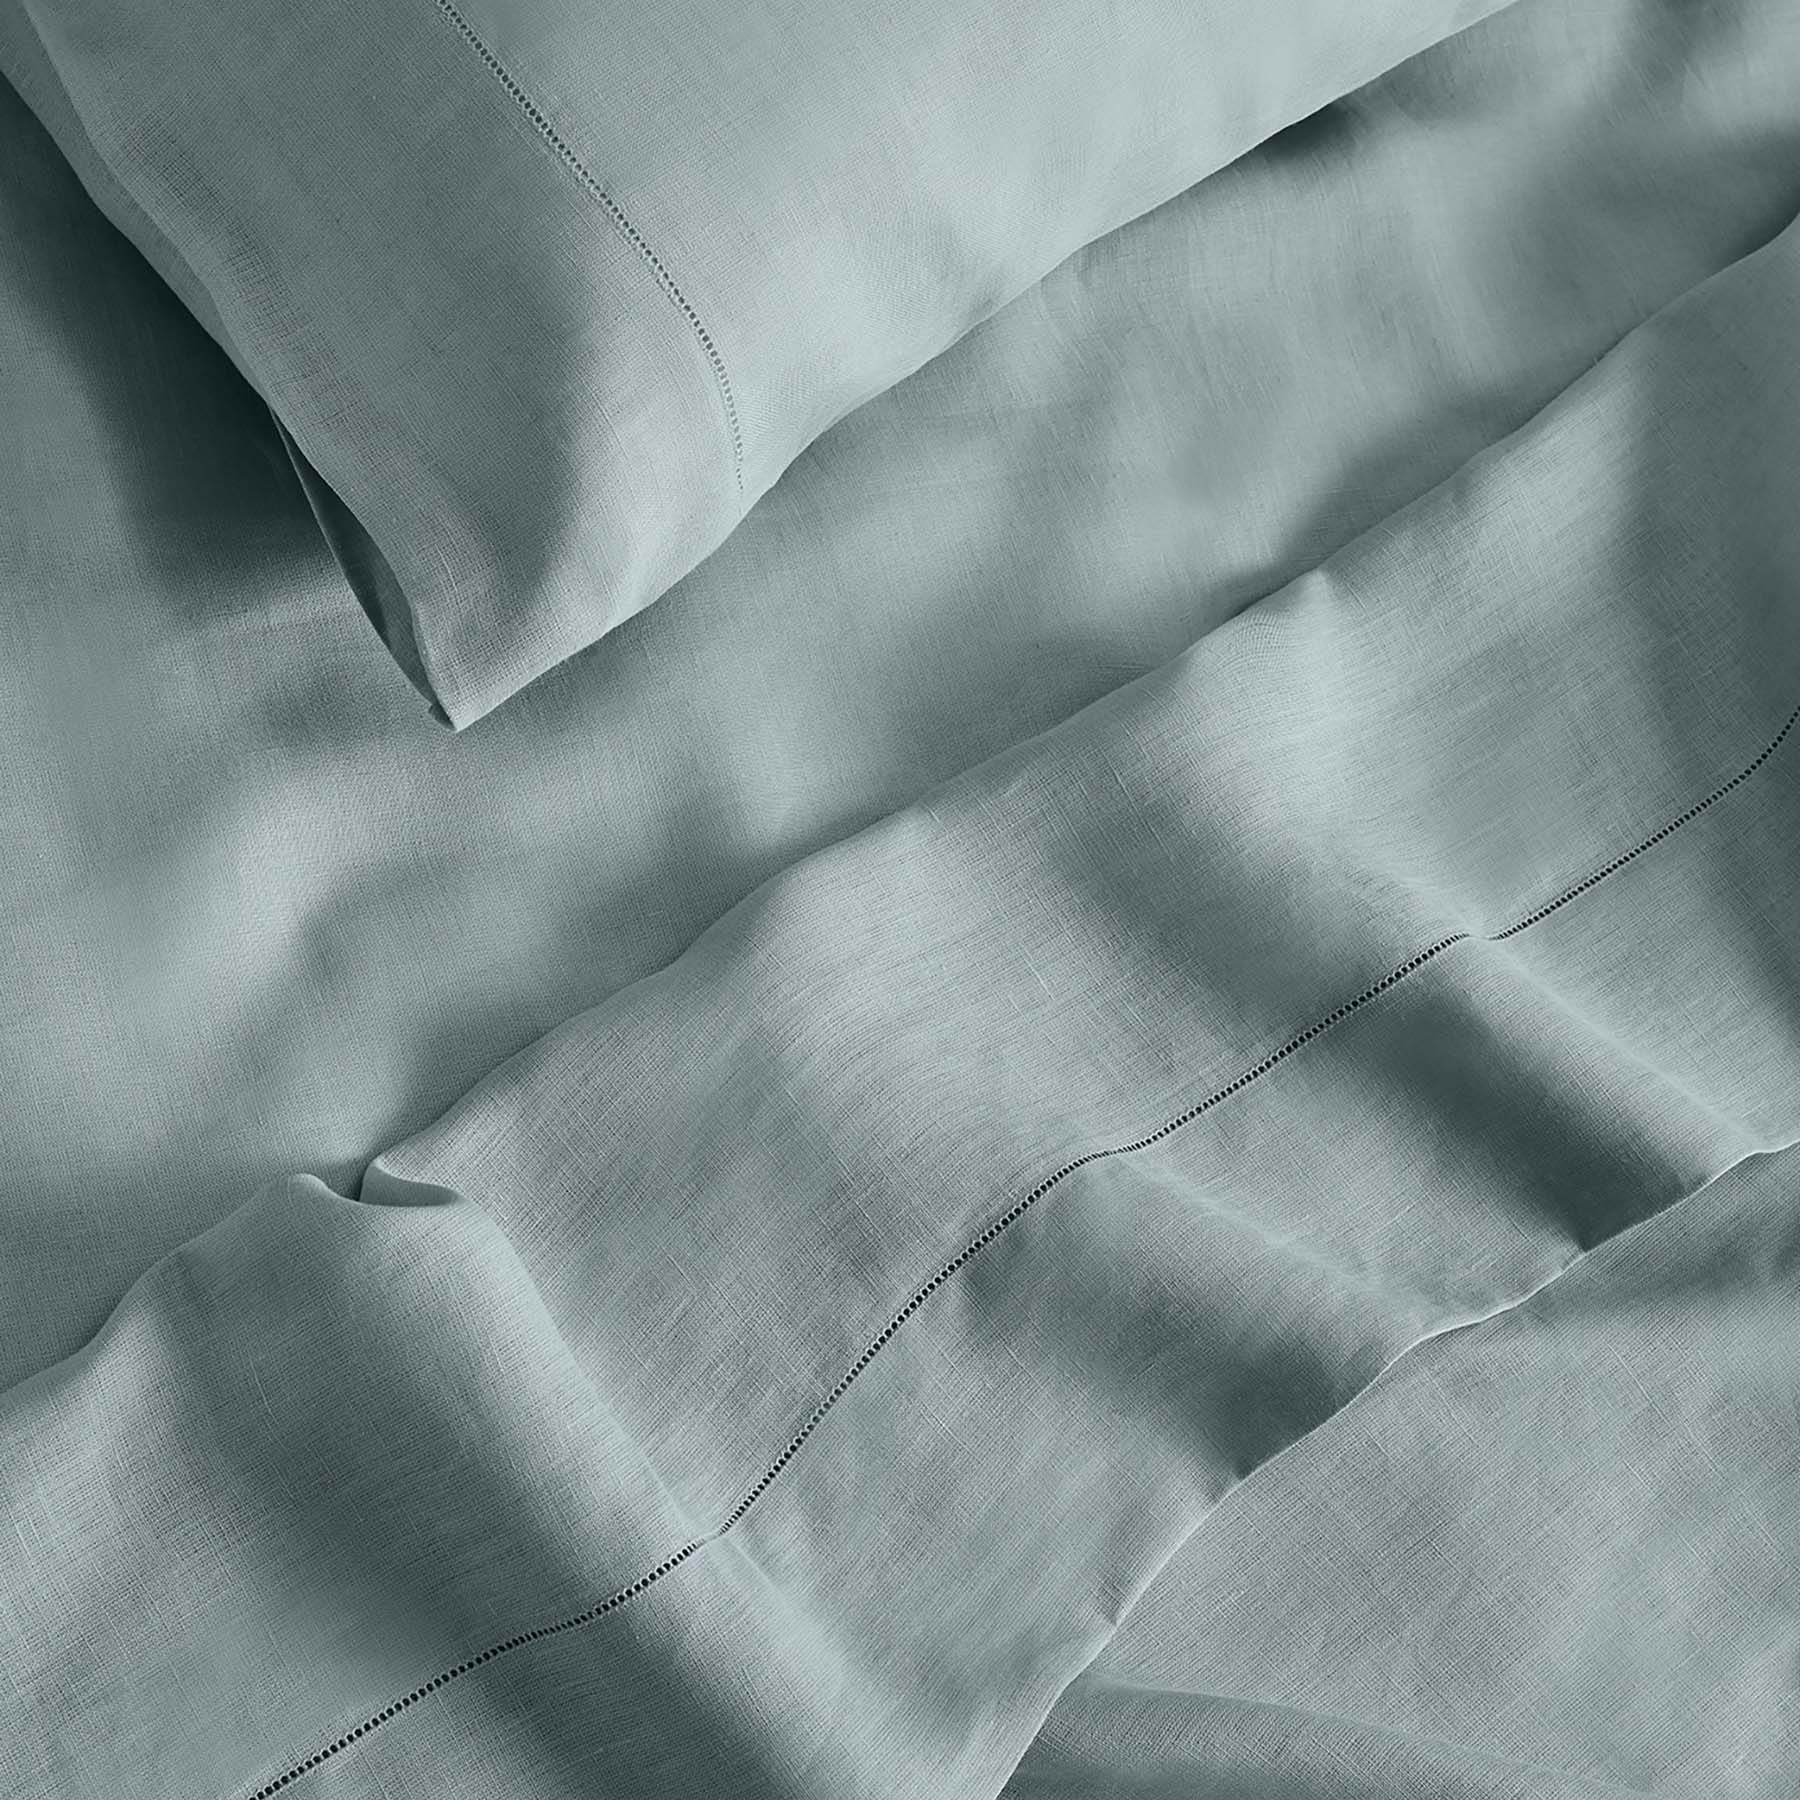 Kings & Queens Vintage Linen Sheet Set in Lake Fabric Detail